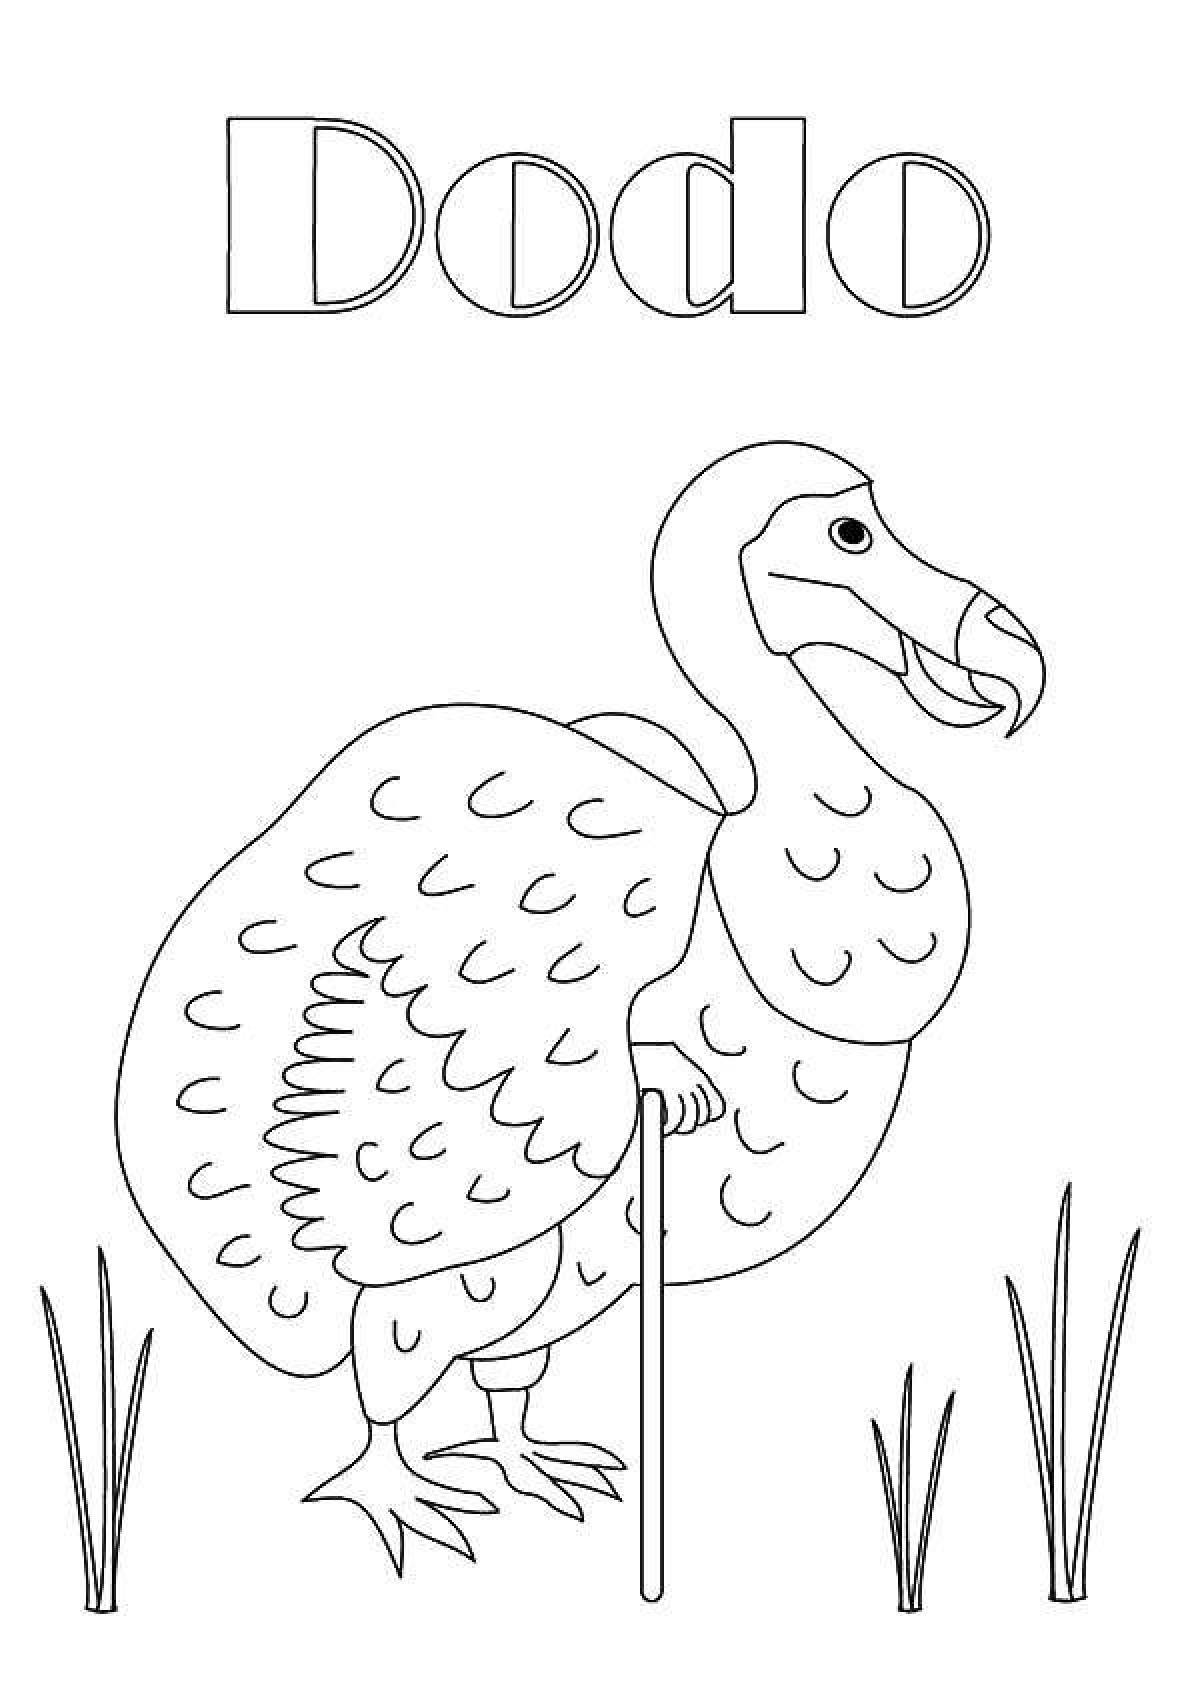 Impressive dodo coloring